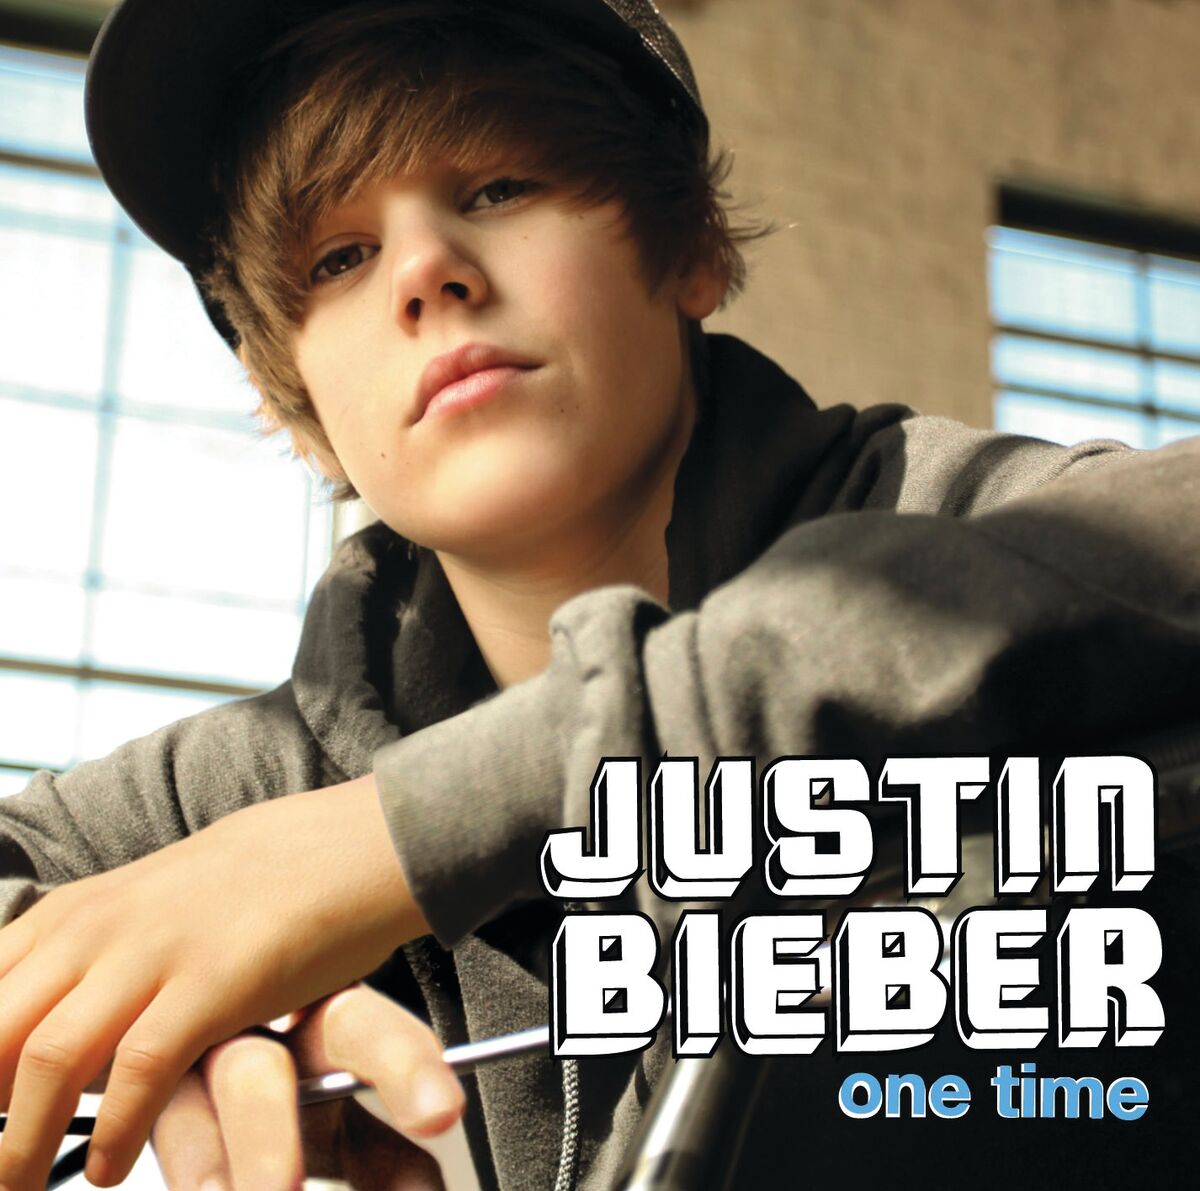 One Time, Justin Bieber Wiki